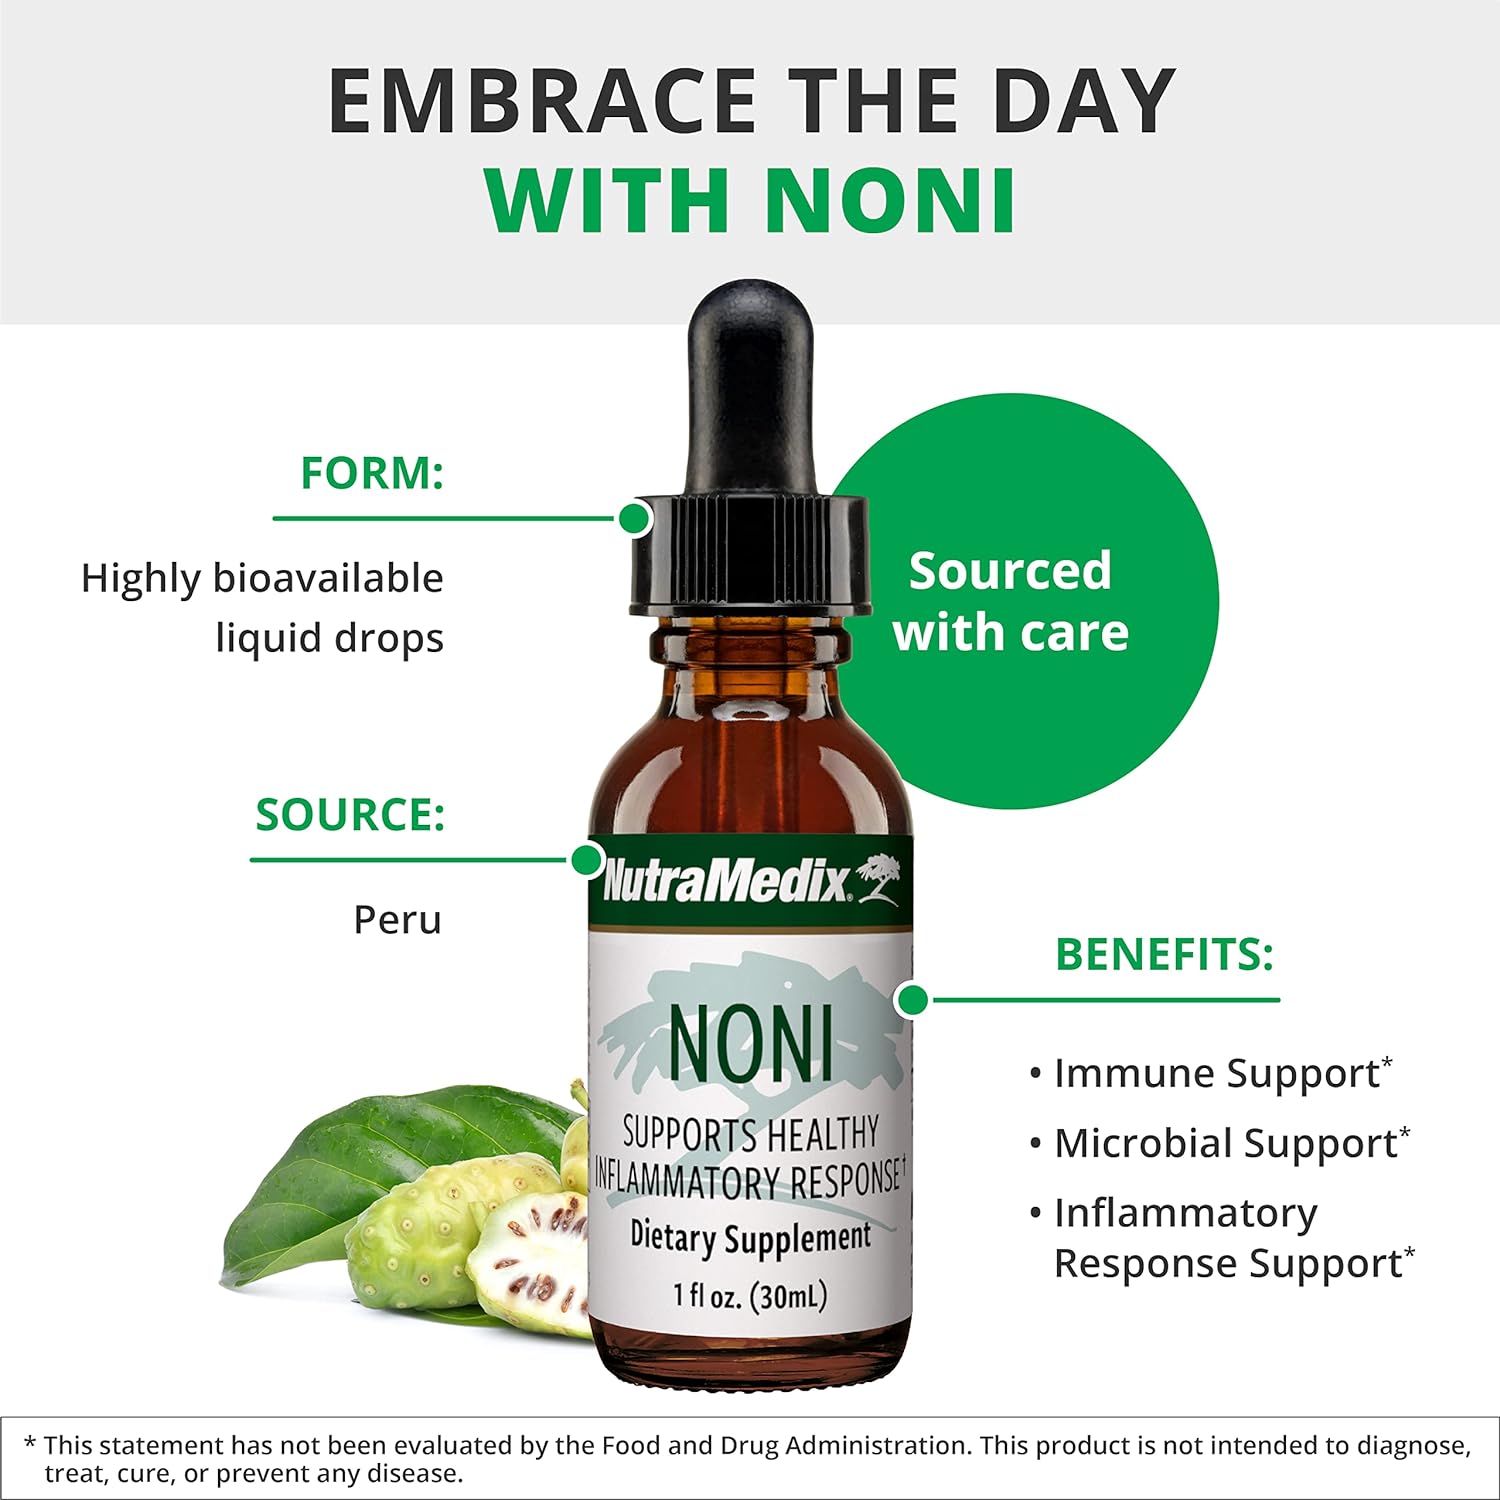 NutraMedix Noni Drops - Noni Fruit Extract for Immune Support & Promot